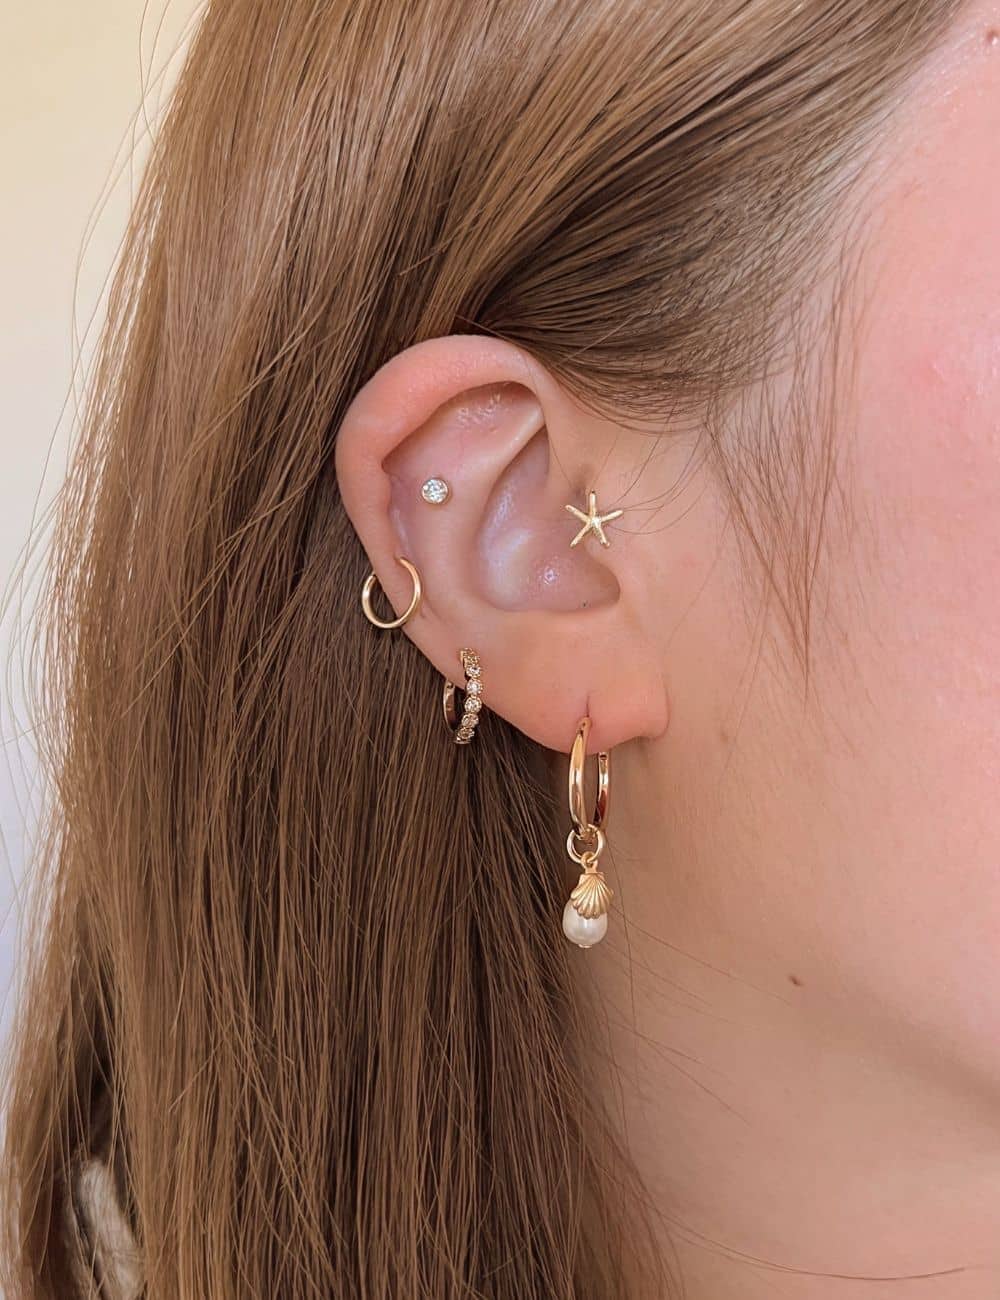 Ariel Starfish Stud Earrings